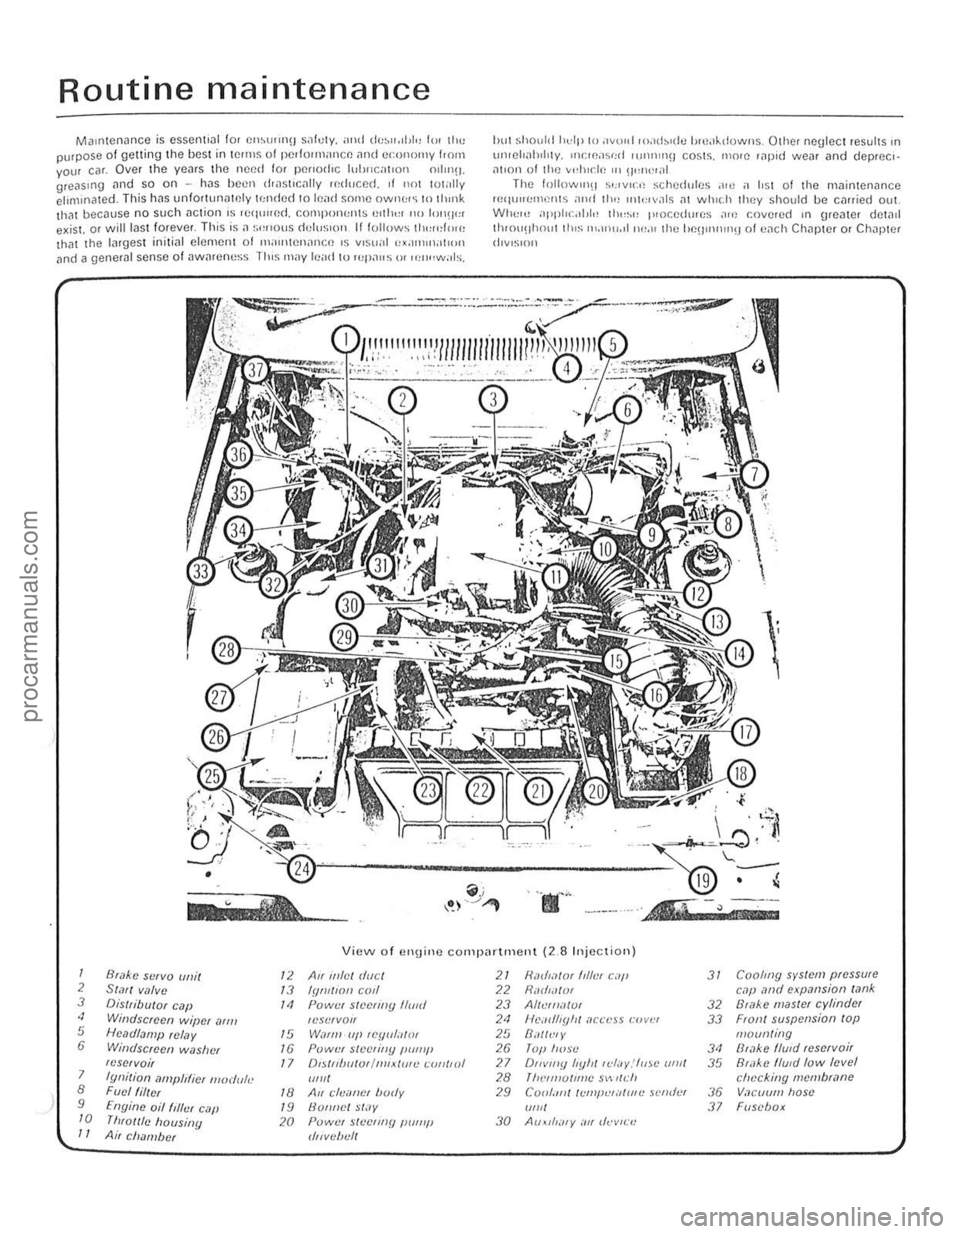 FORD CAPRI 1974 User Guide Routine maintenance 
Maintenance is essential tOI C"~l"'Il\J sal"I\,. <lnd de~",jt,l" lor \I1 purpoSe o f gening the best inleflll~ of peduPlllilllCr. nnd economy 110m yOlir car . 